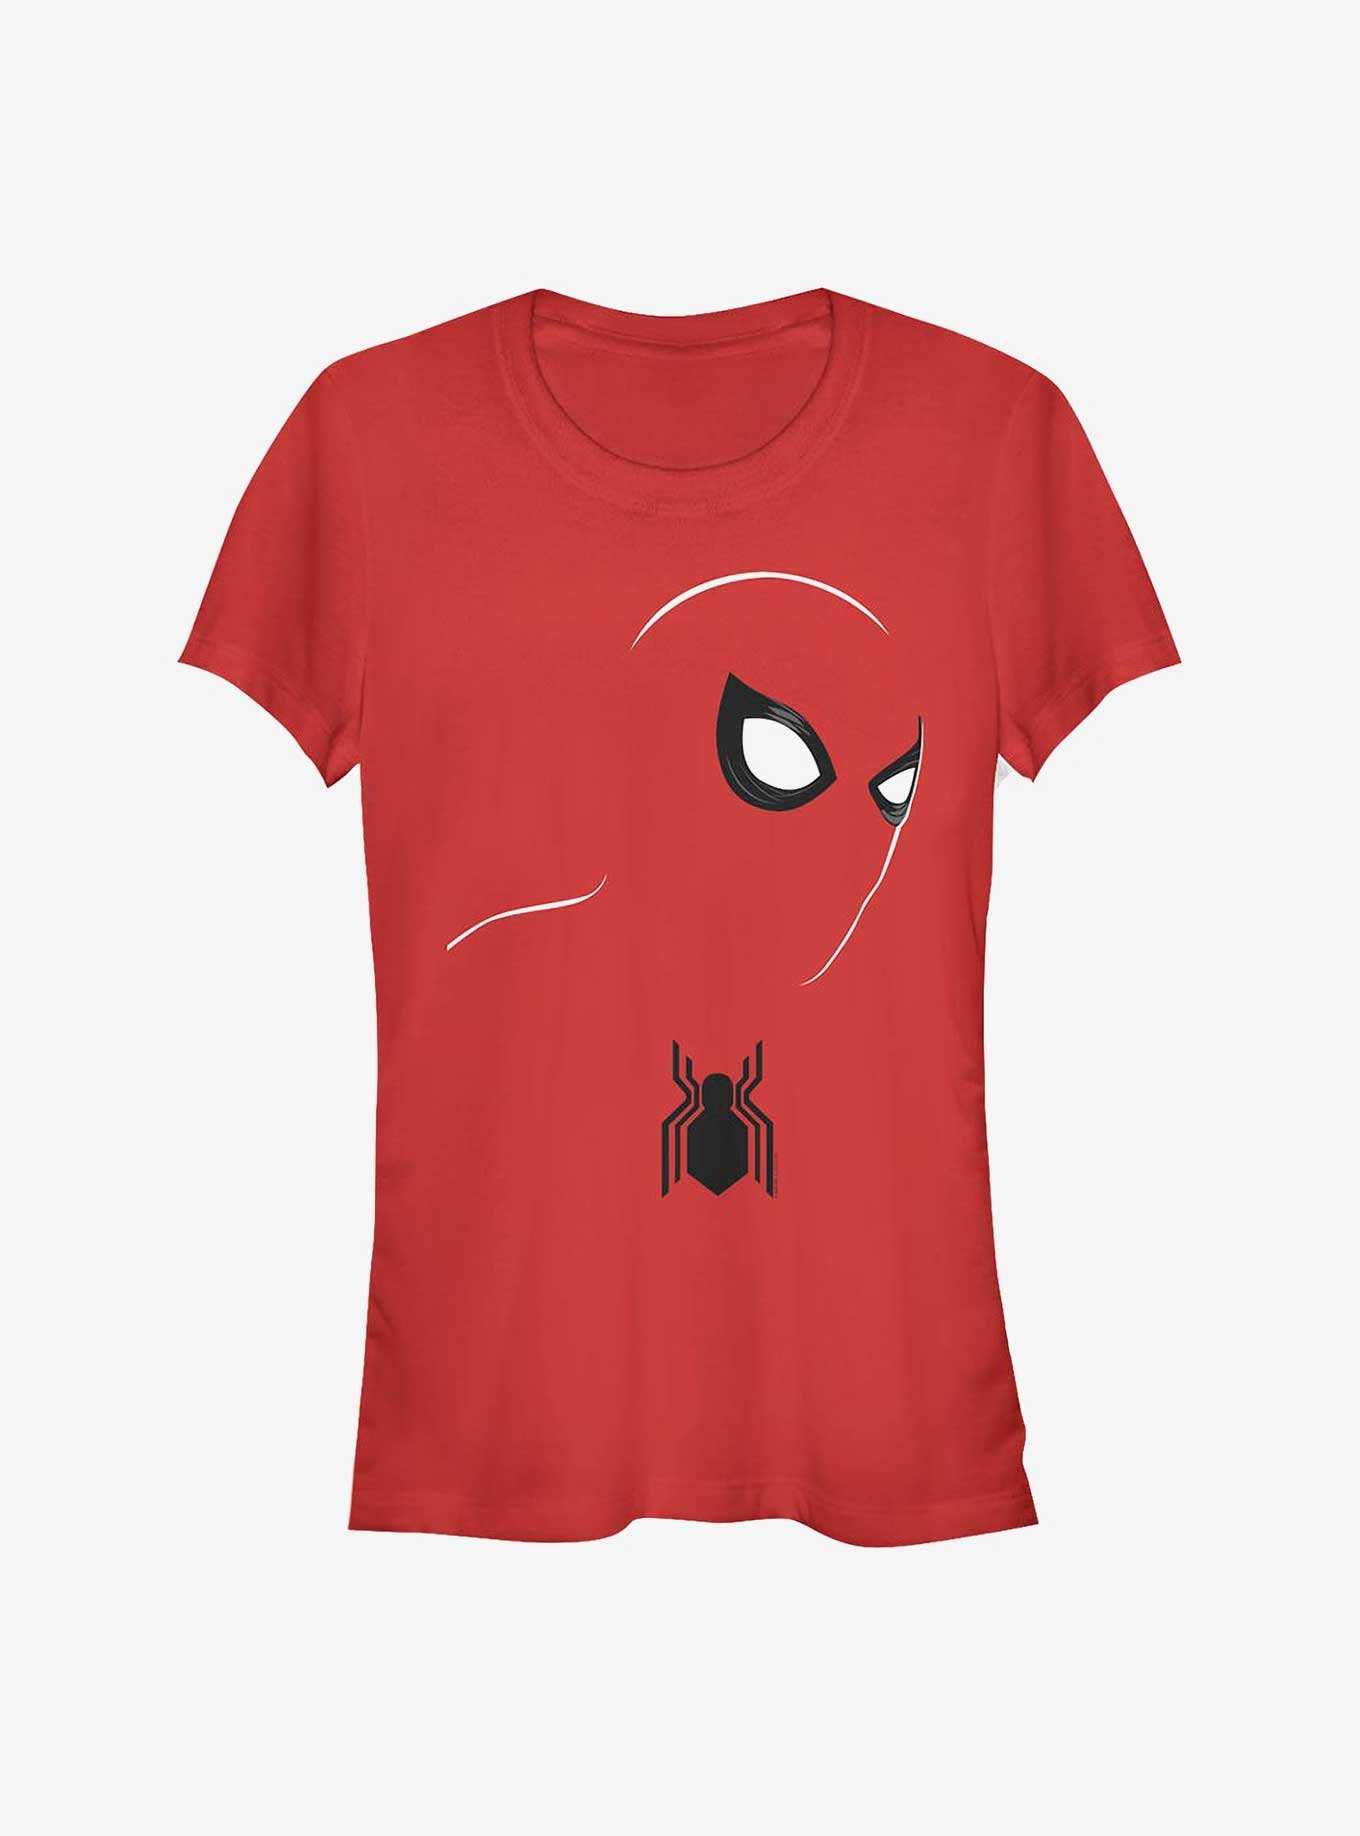 Marvel Spider-Man Spidey Face Girls T-Shirt, , hi-res